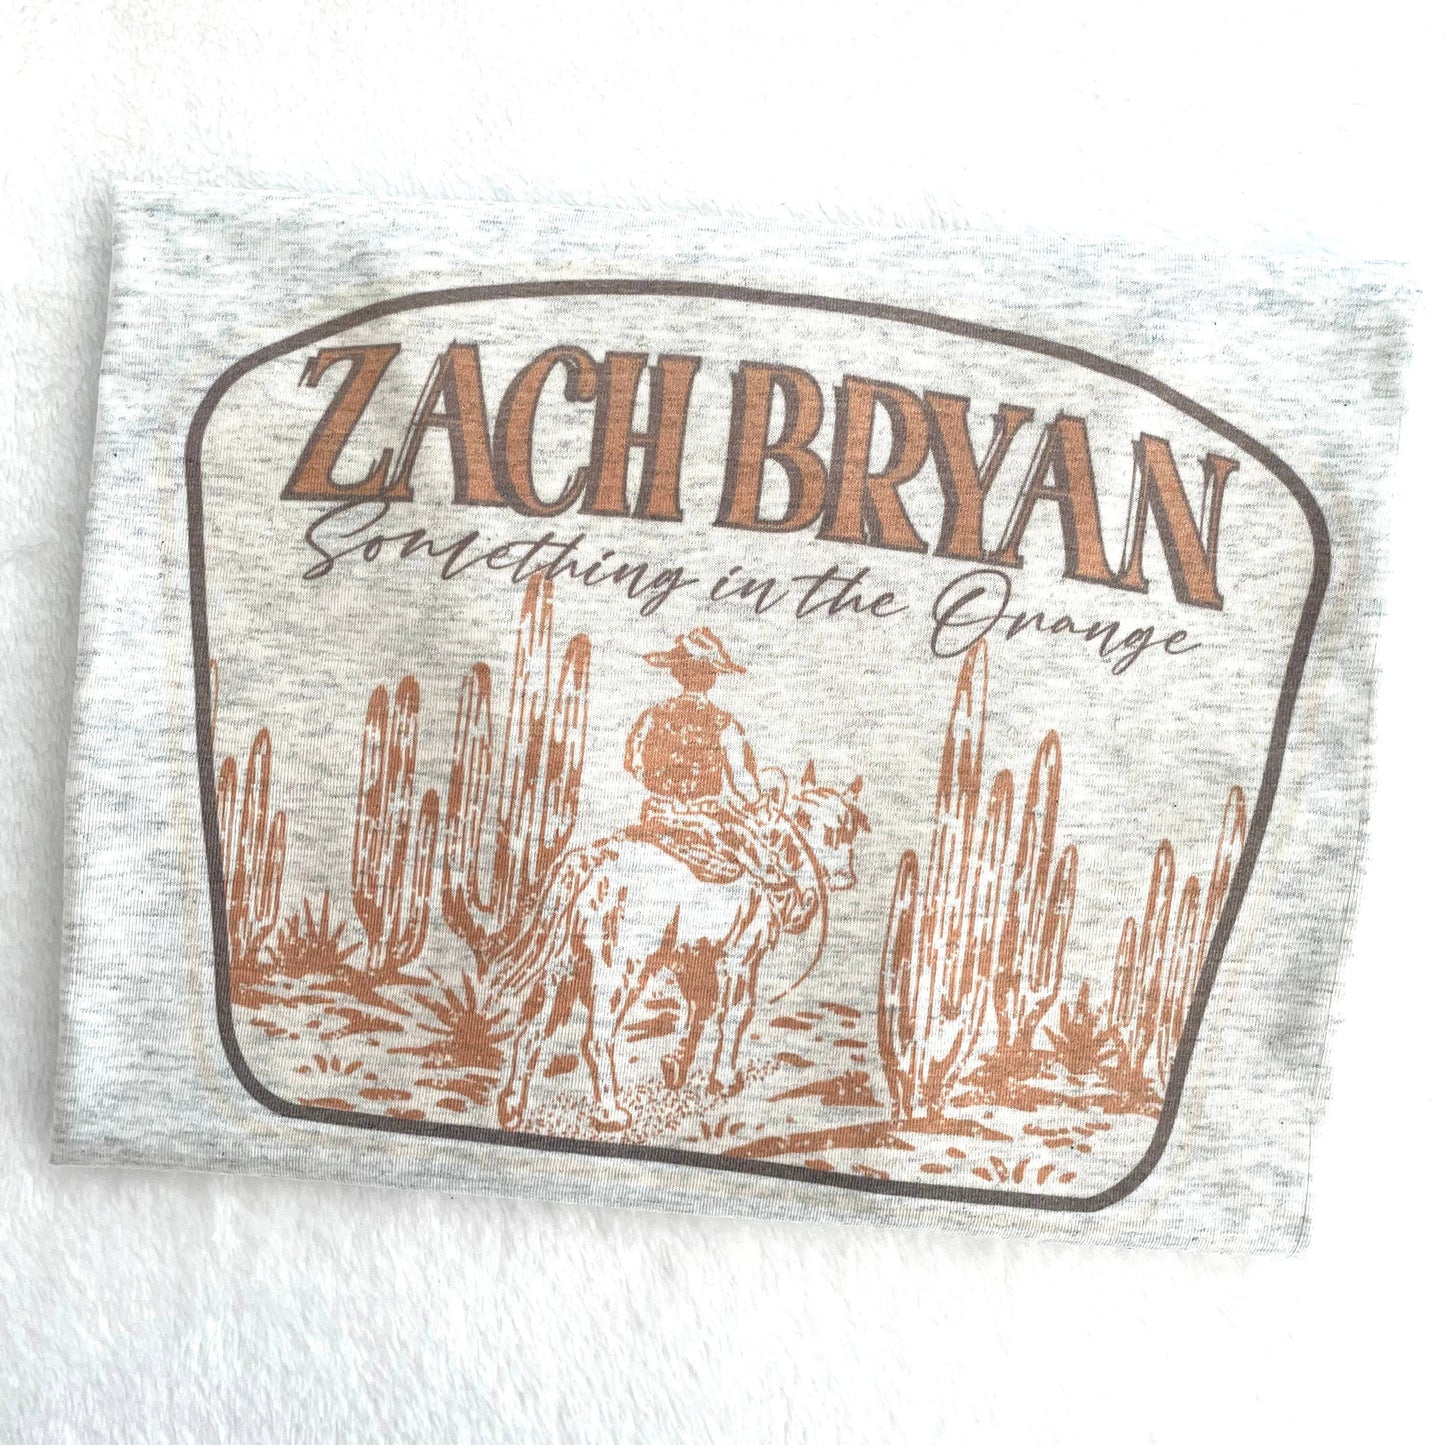 Something In The Orange Zach Bryan - Western Country Shirt